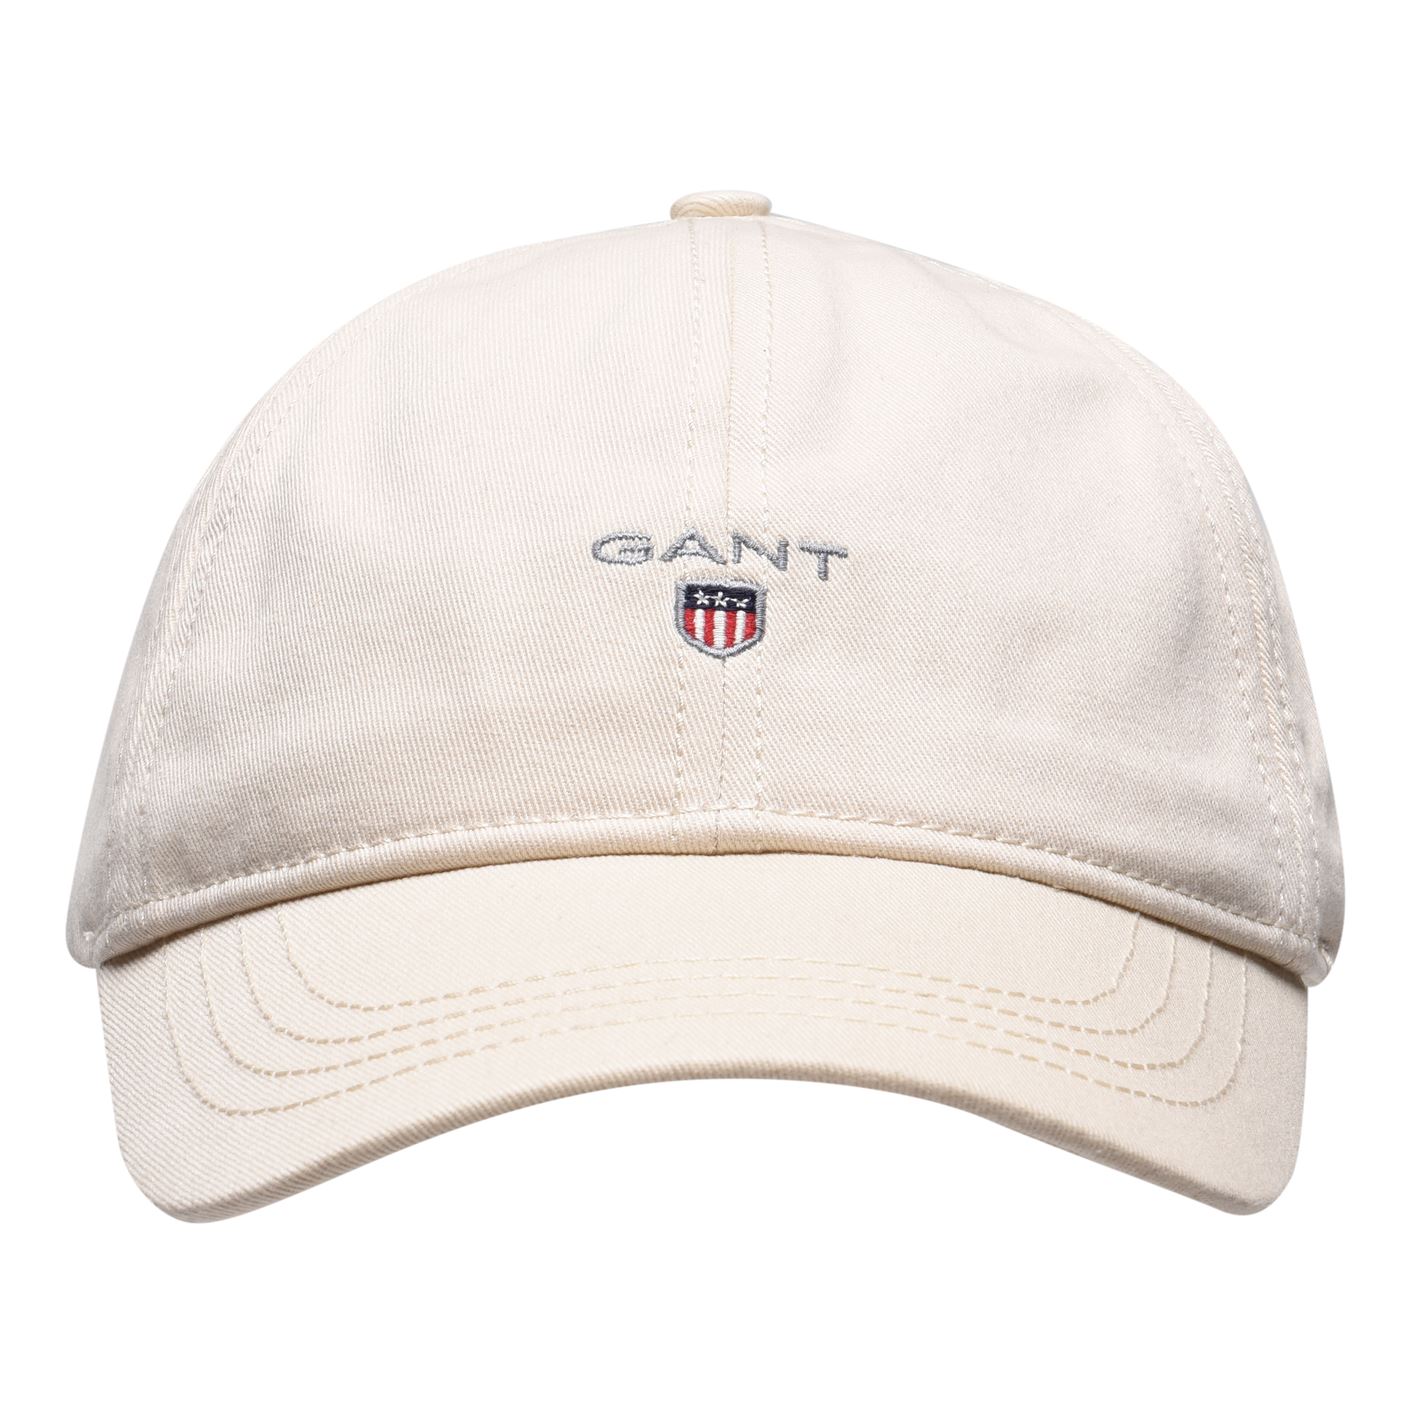 Бейсболка хлопок. Кепка Gant Melton cap. Gant Basic cap White. Белая кепка Gant. Кепка Gant бежевая.